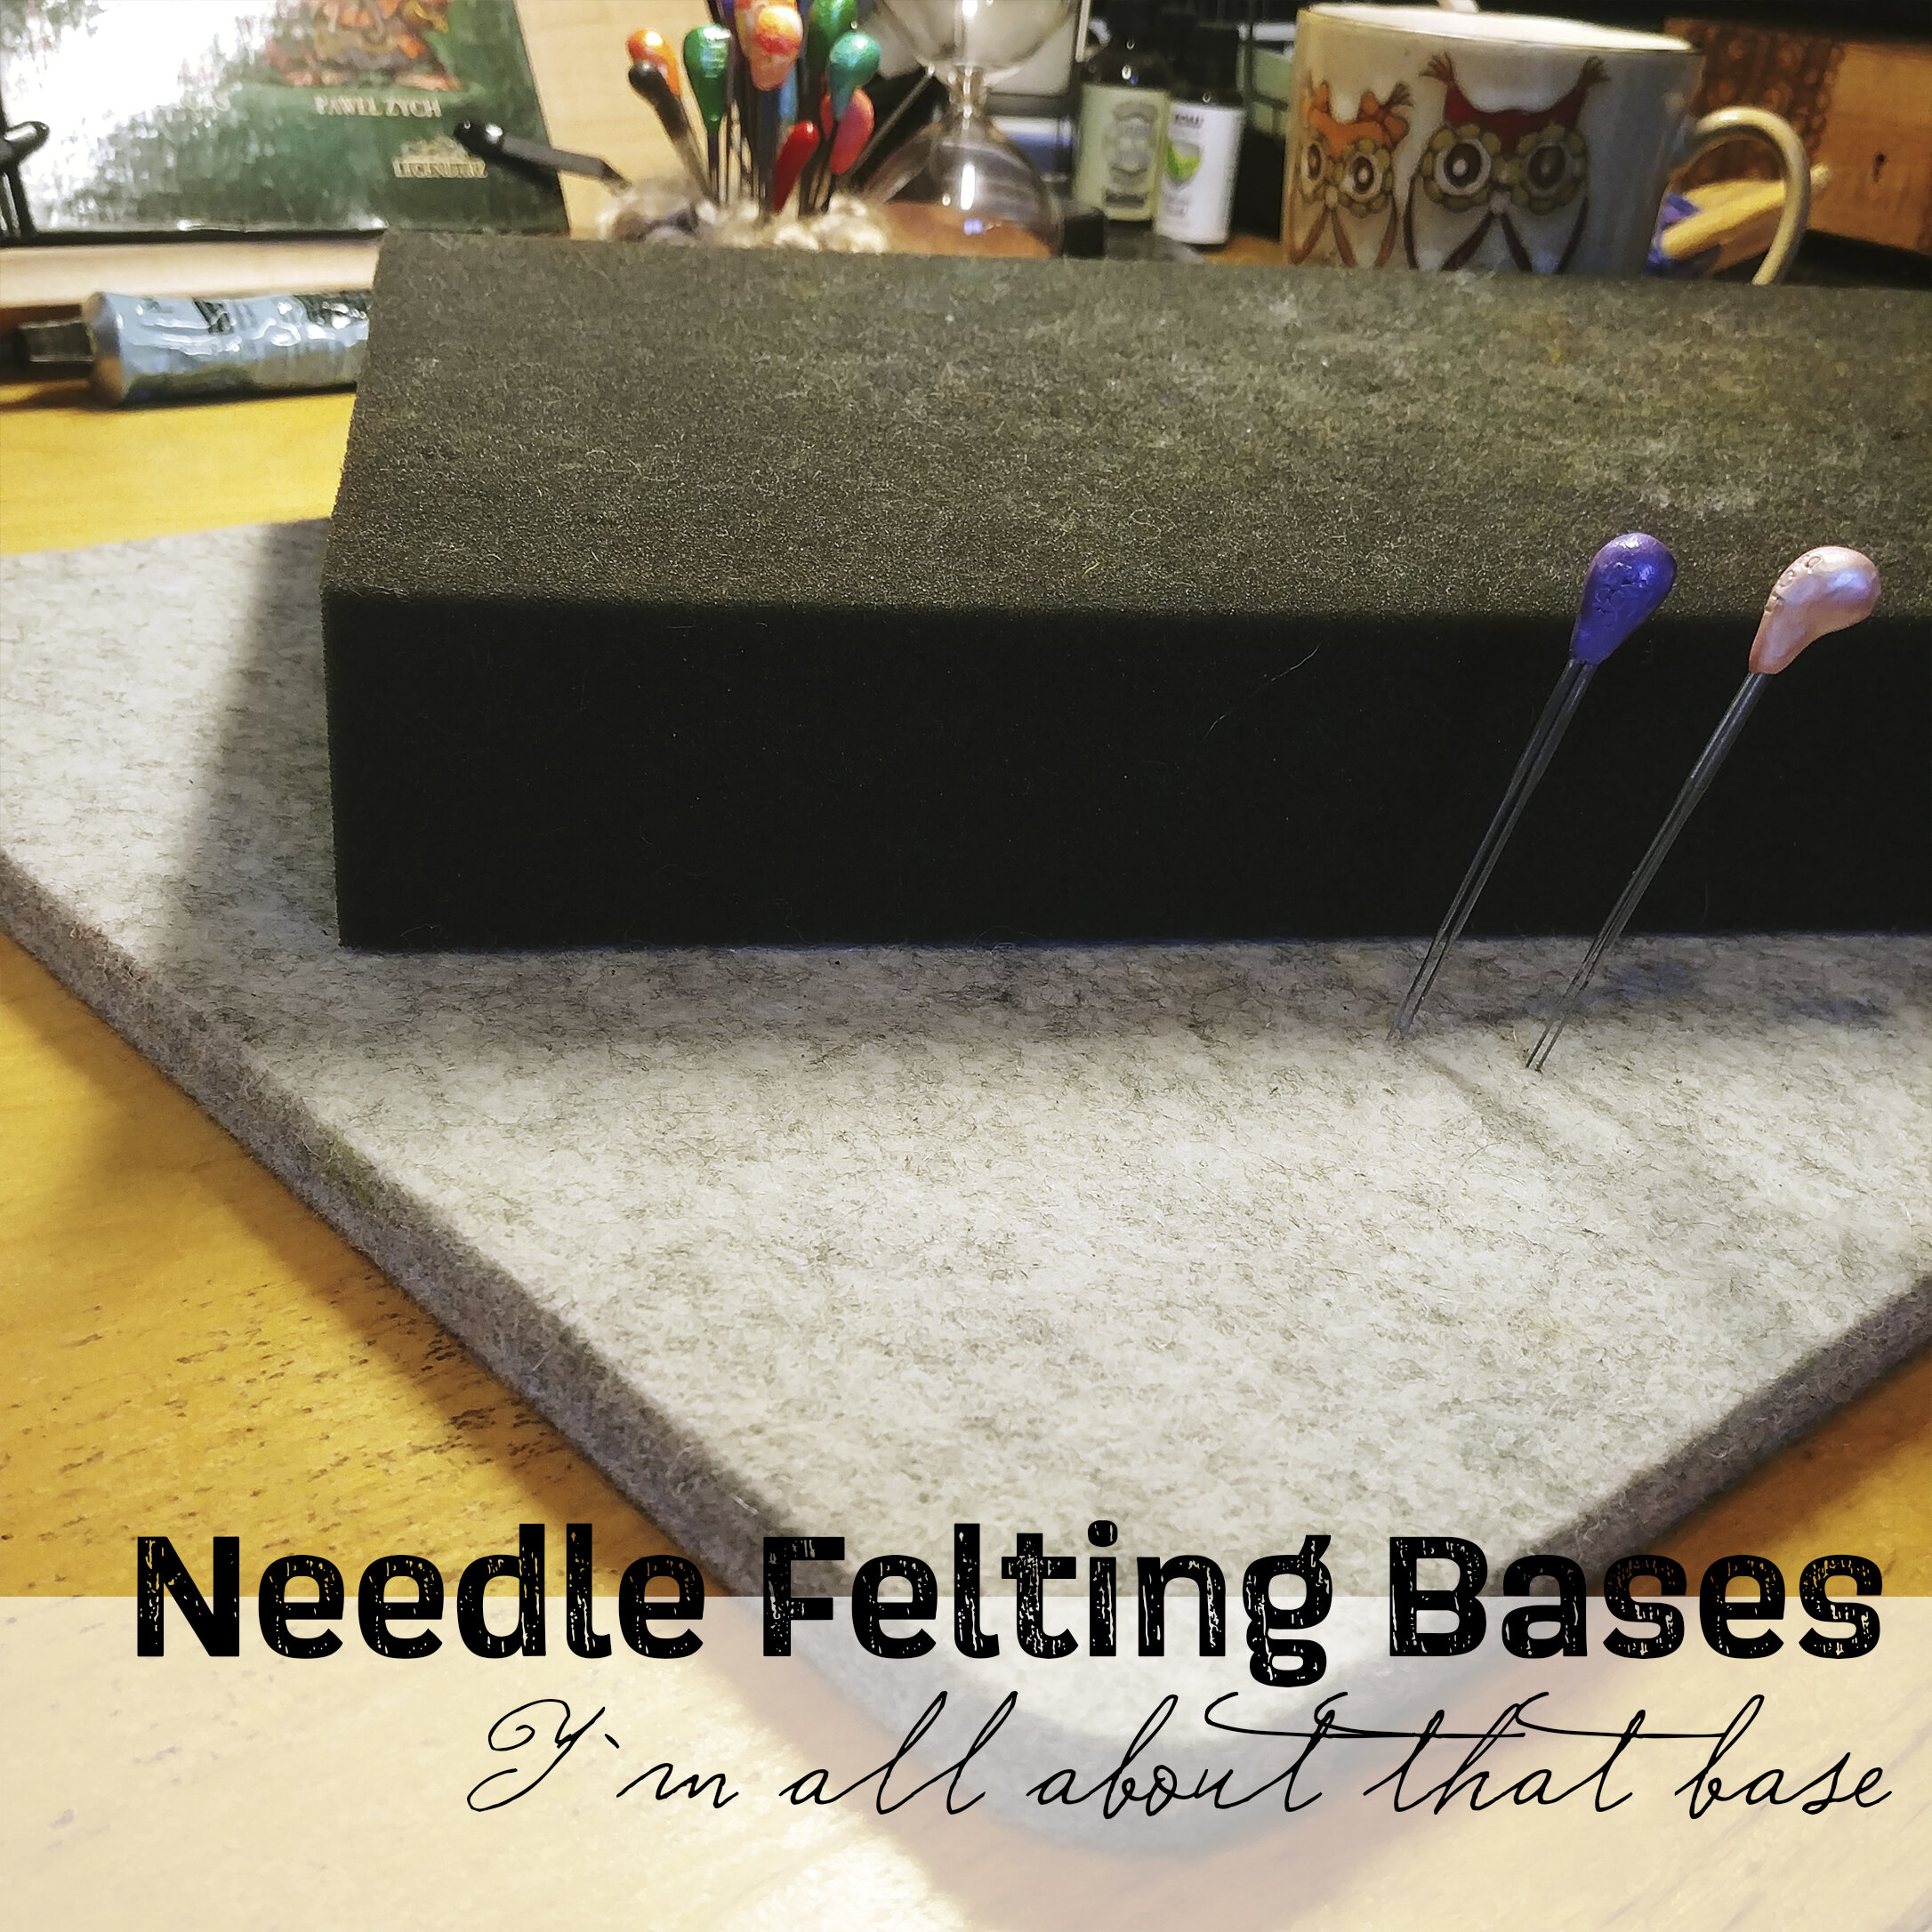 Wool felting cushion the best work surface for your needle felting